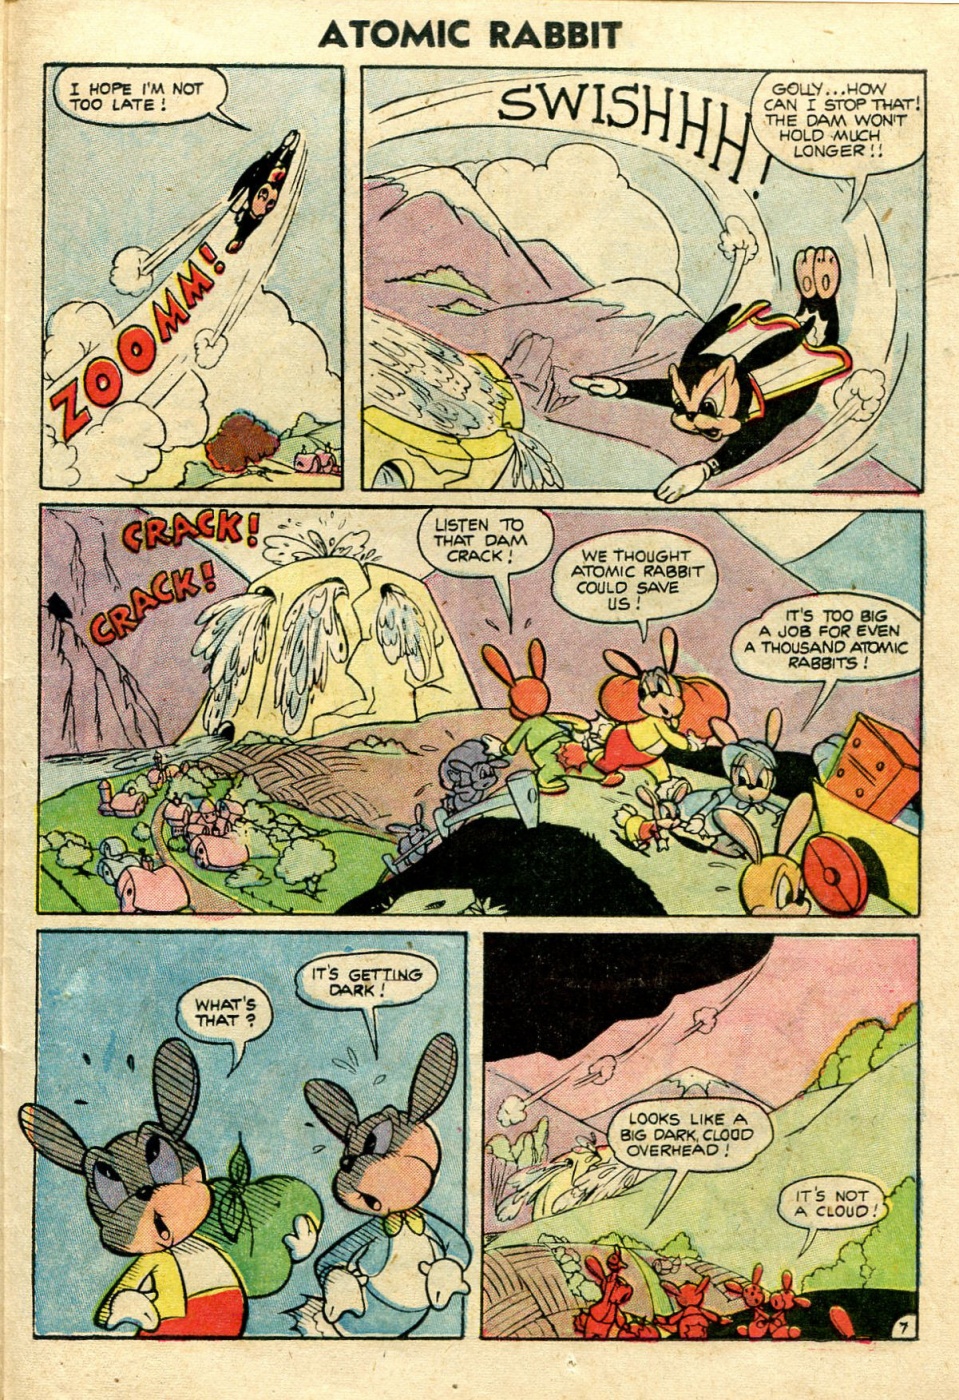 Atomic Rabbit Comics (25)